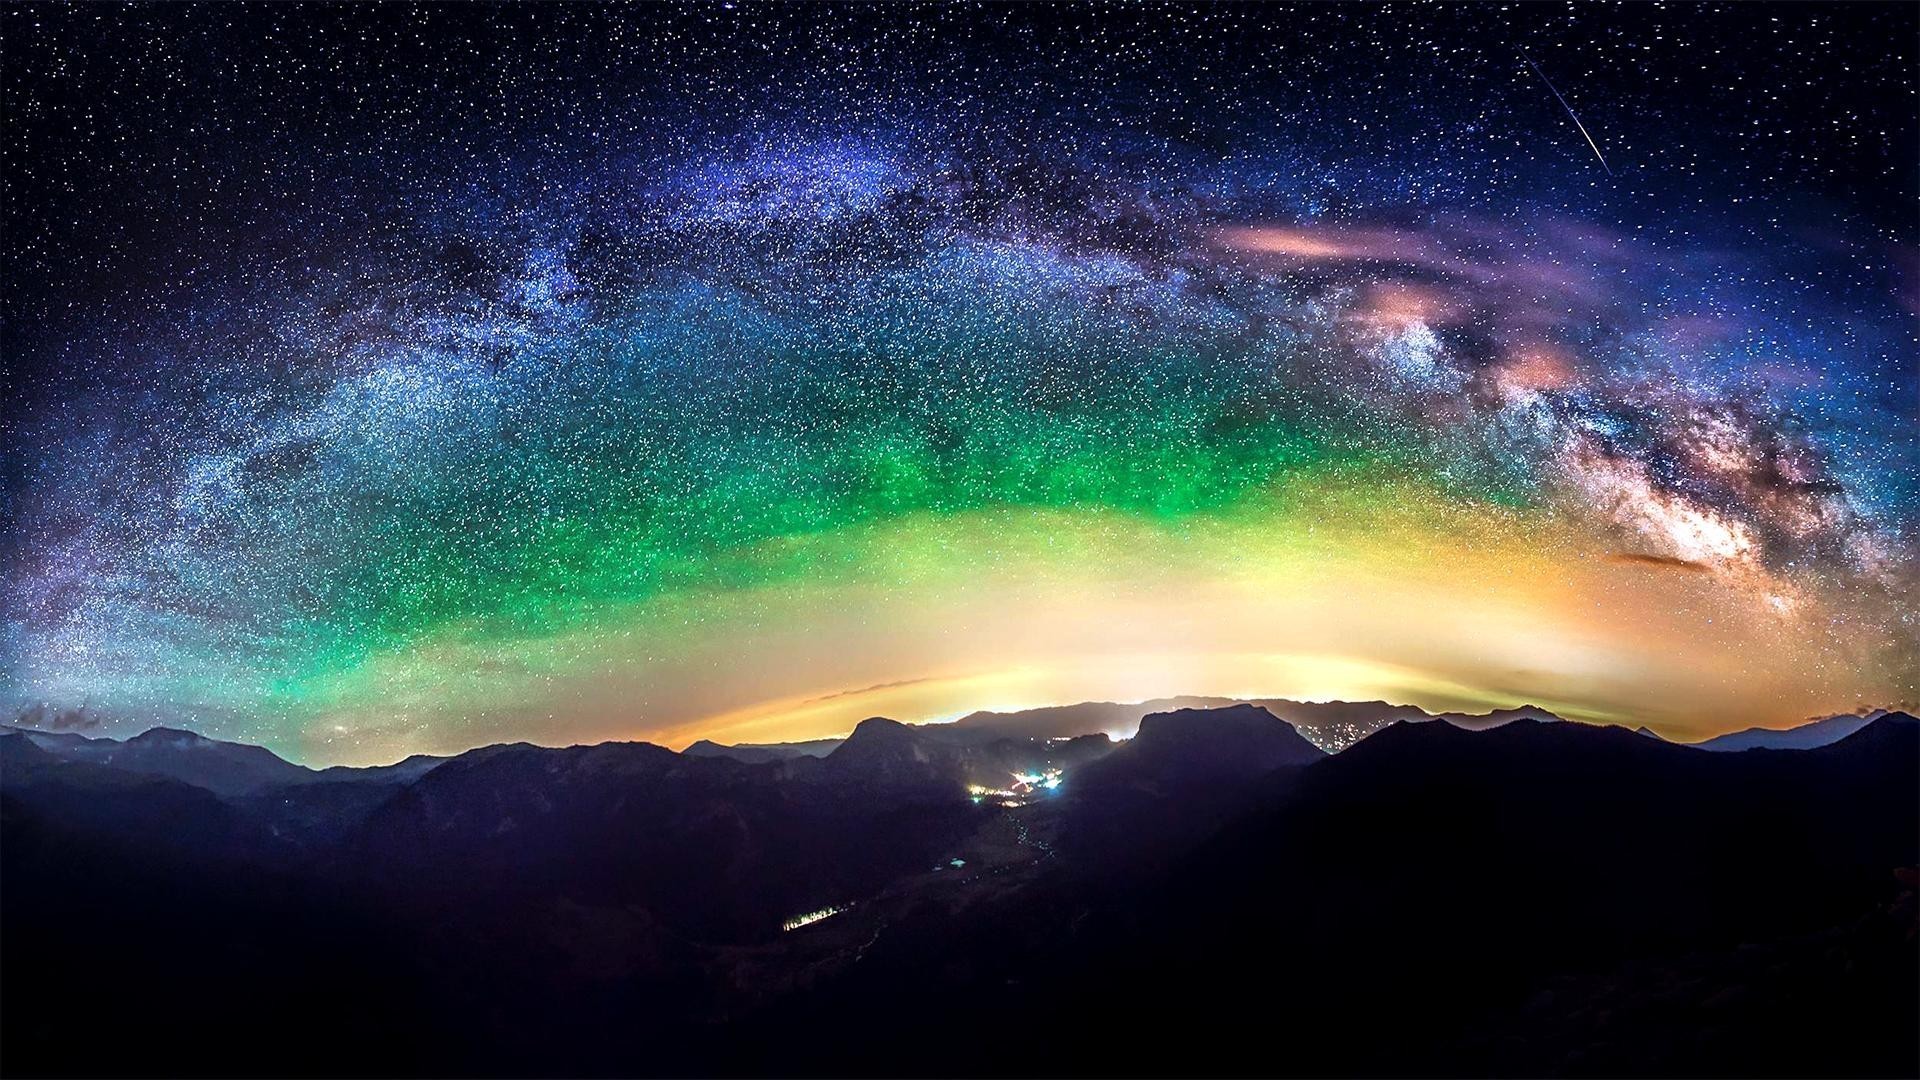 Milky Way Galaxy Wallpapers Free Download | PixelsTalk.Net